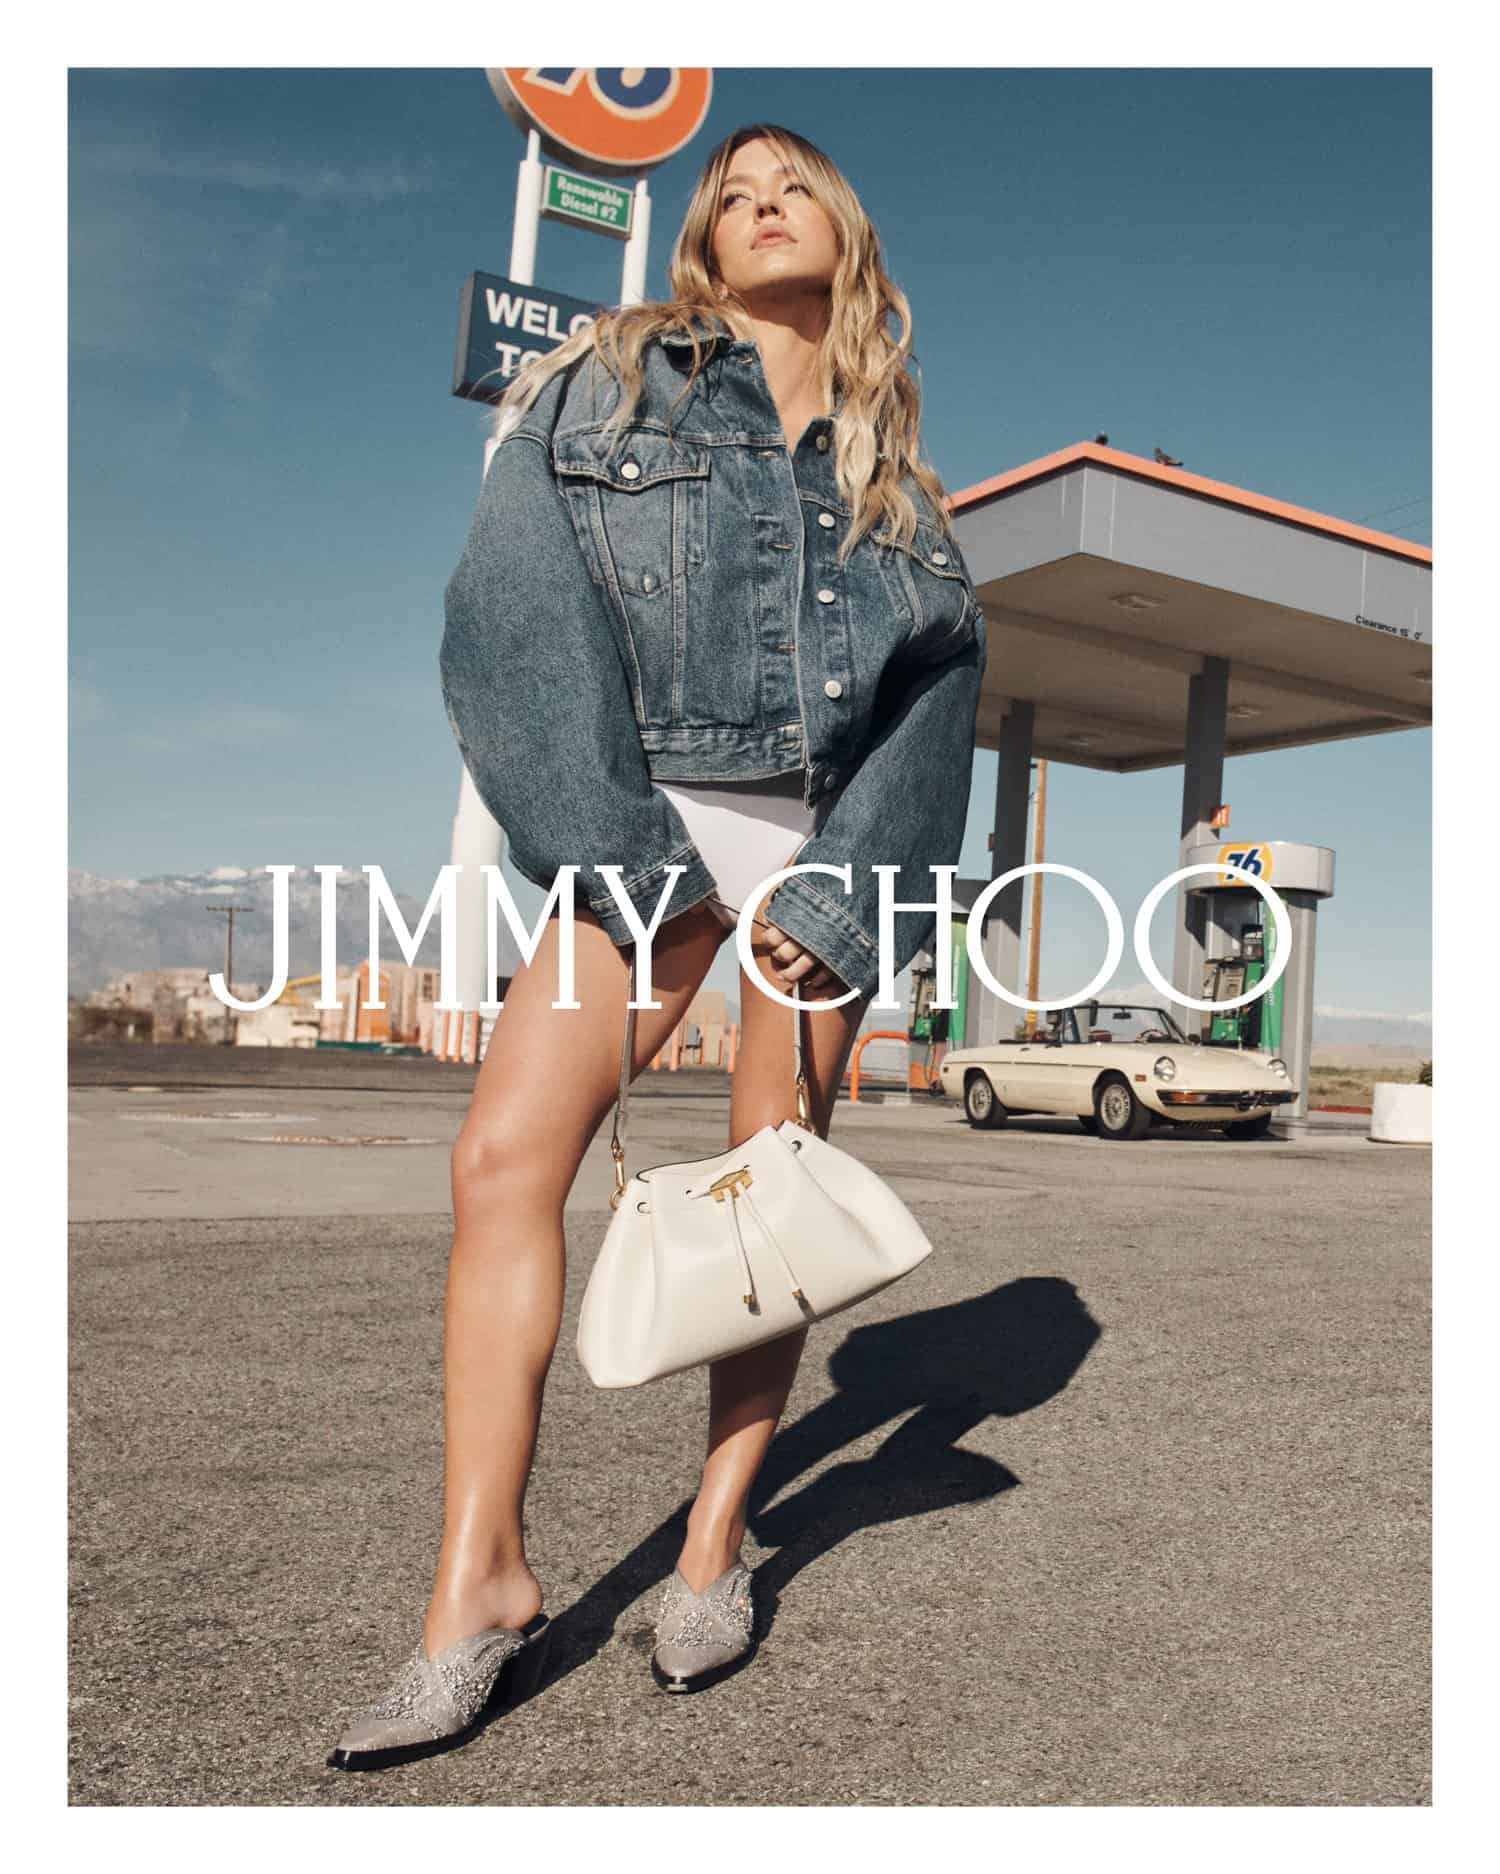 JIMMY CHOO, Sydney Sweeney, campaigns, Summer 2024, shoes, heels, bags, accessories